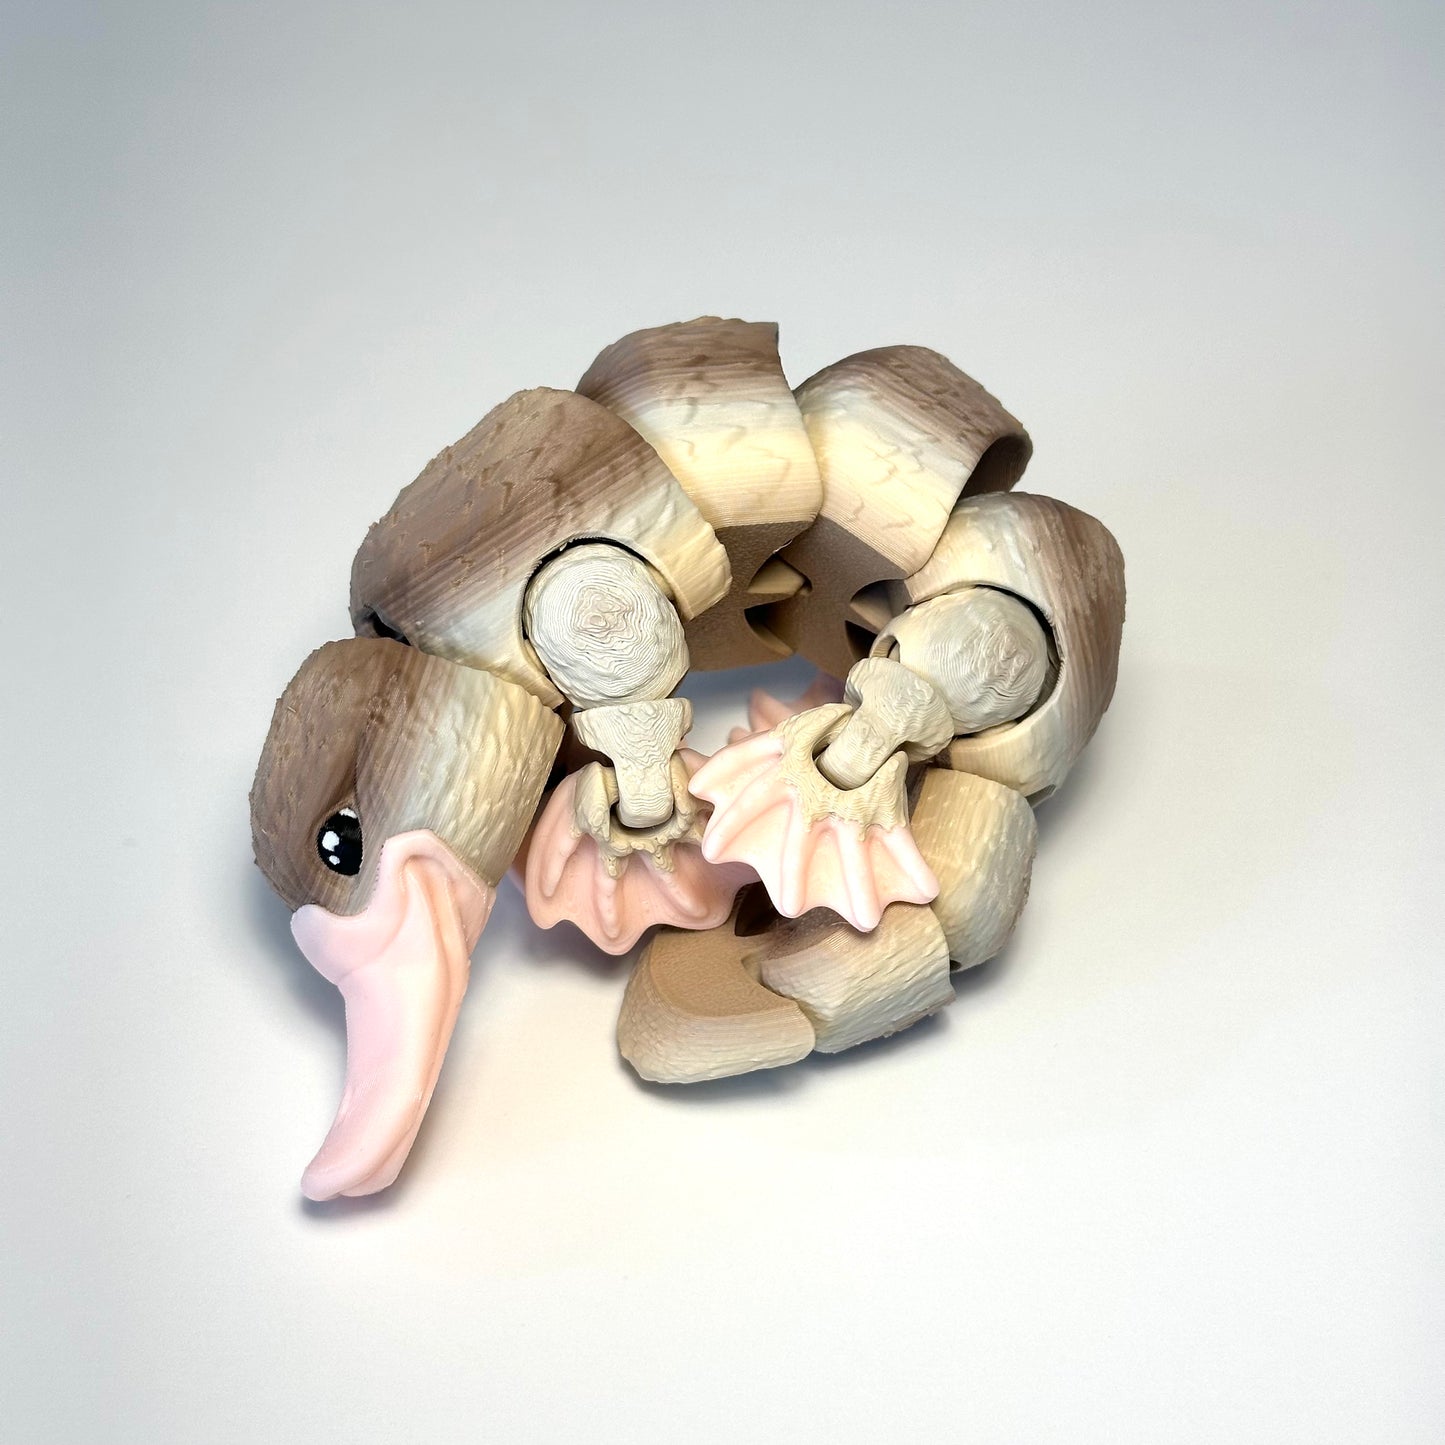 Platypus - 3D printed Articulating